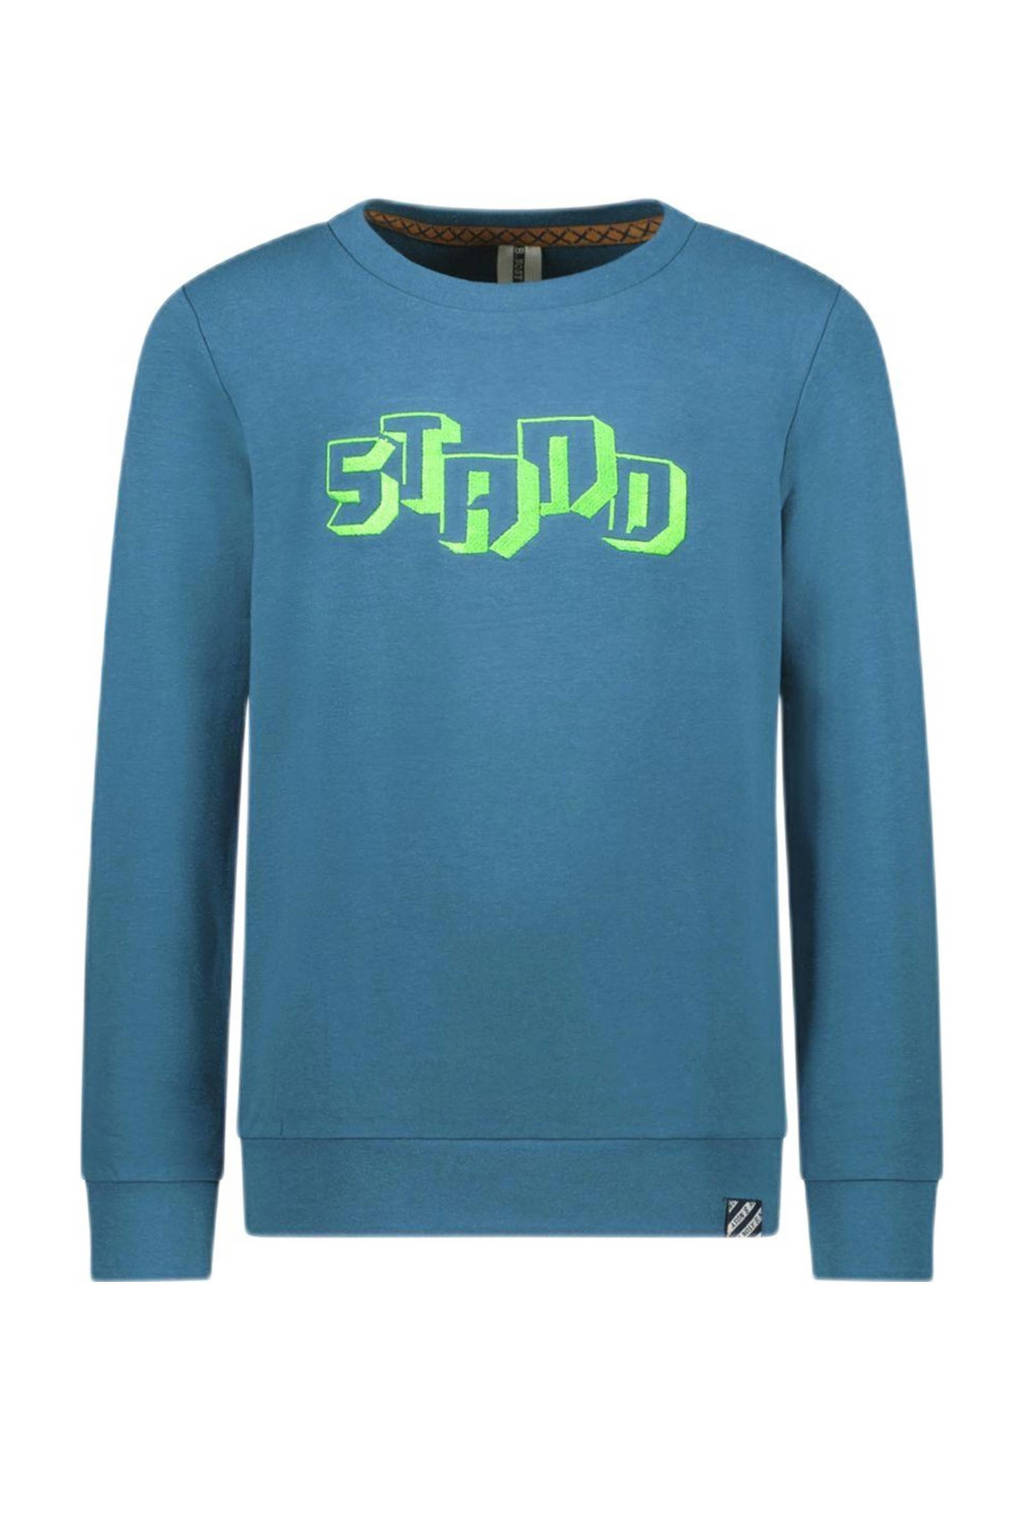 sweater B.BOLD met printopdruk turquoise